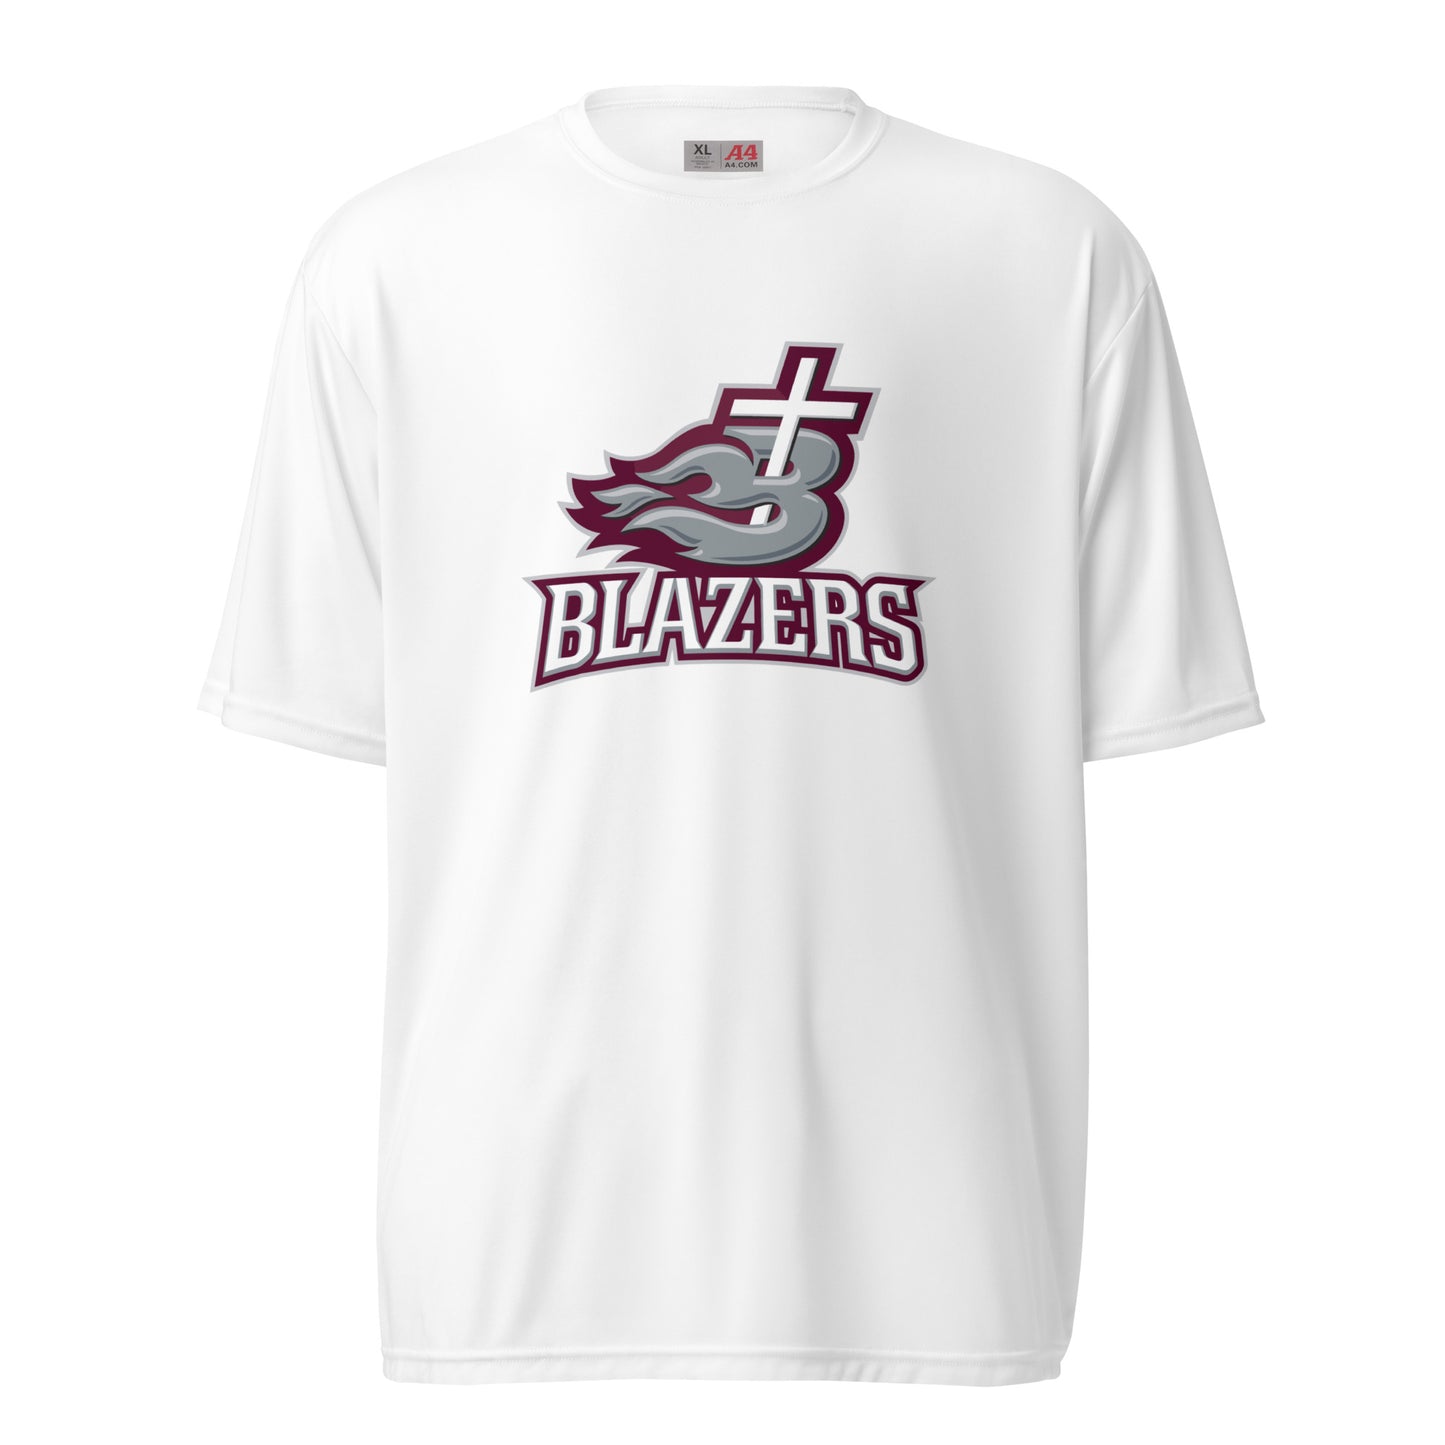 Blazers Unisex Performance Crew Neck T-Shirt